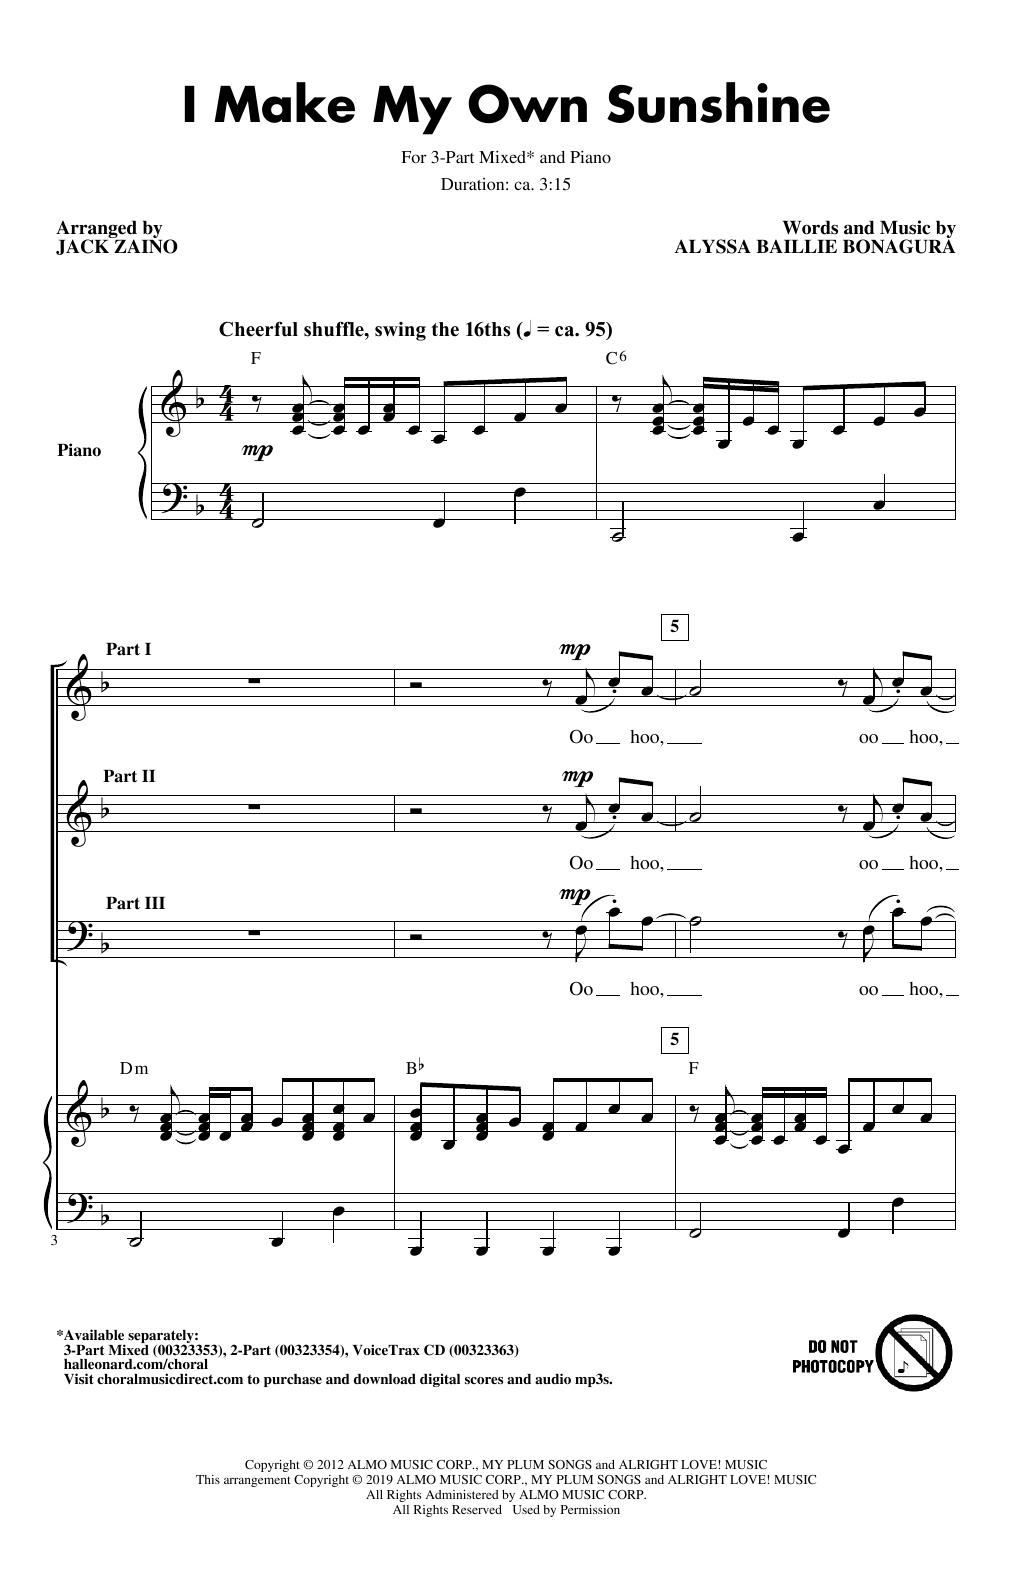 Alyssa Bonagura I Make My Own Sunshine (arr. Jack Zaino) Sheet Music Notes & Chords for 2-Part Choir - Download or Print PDF